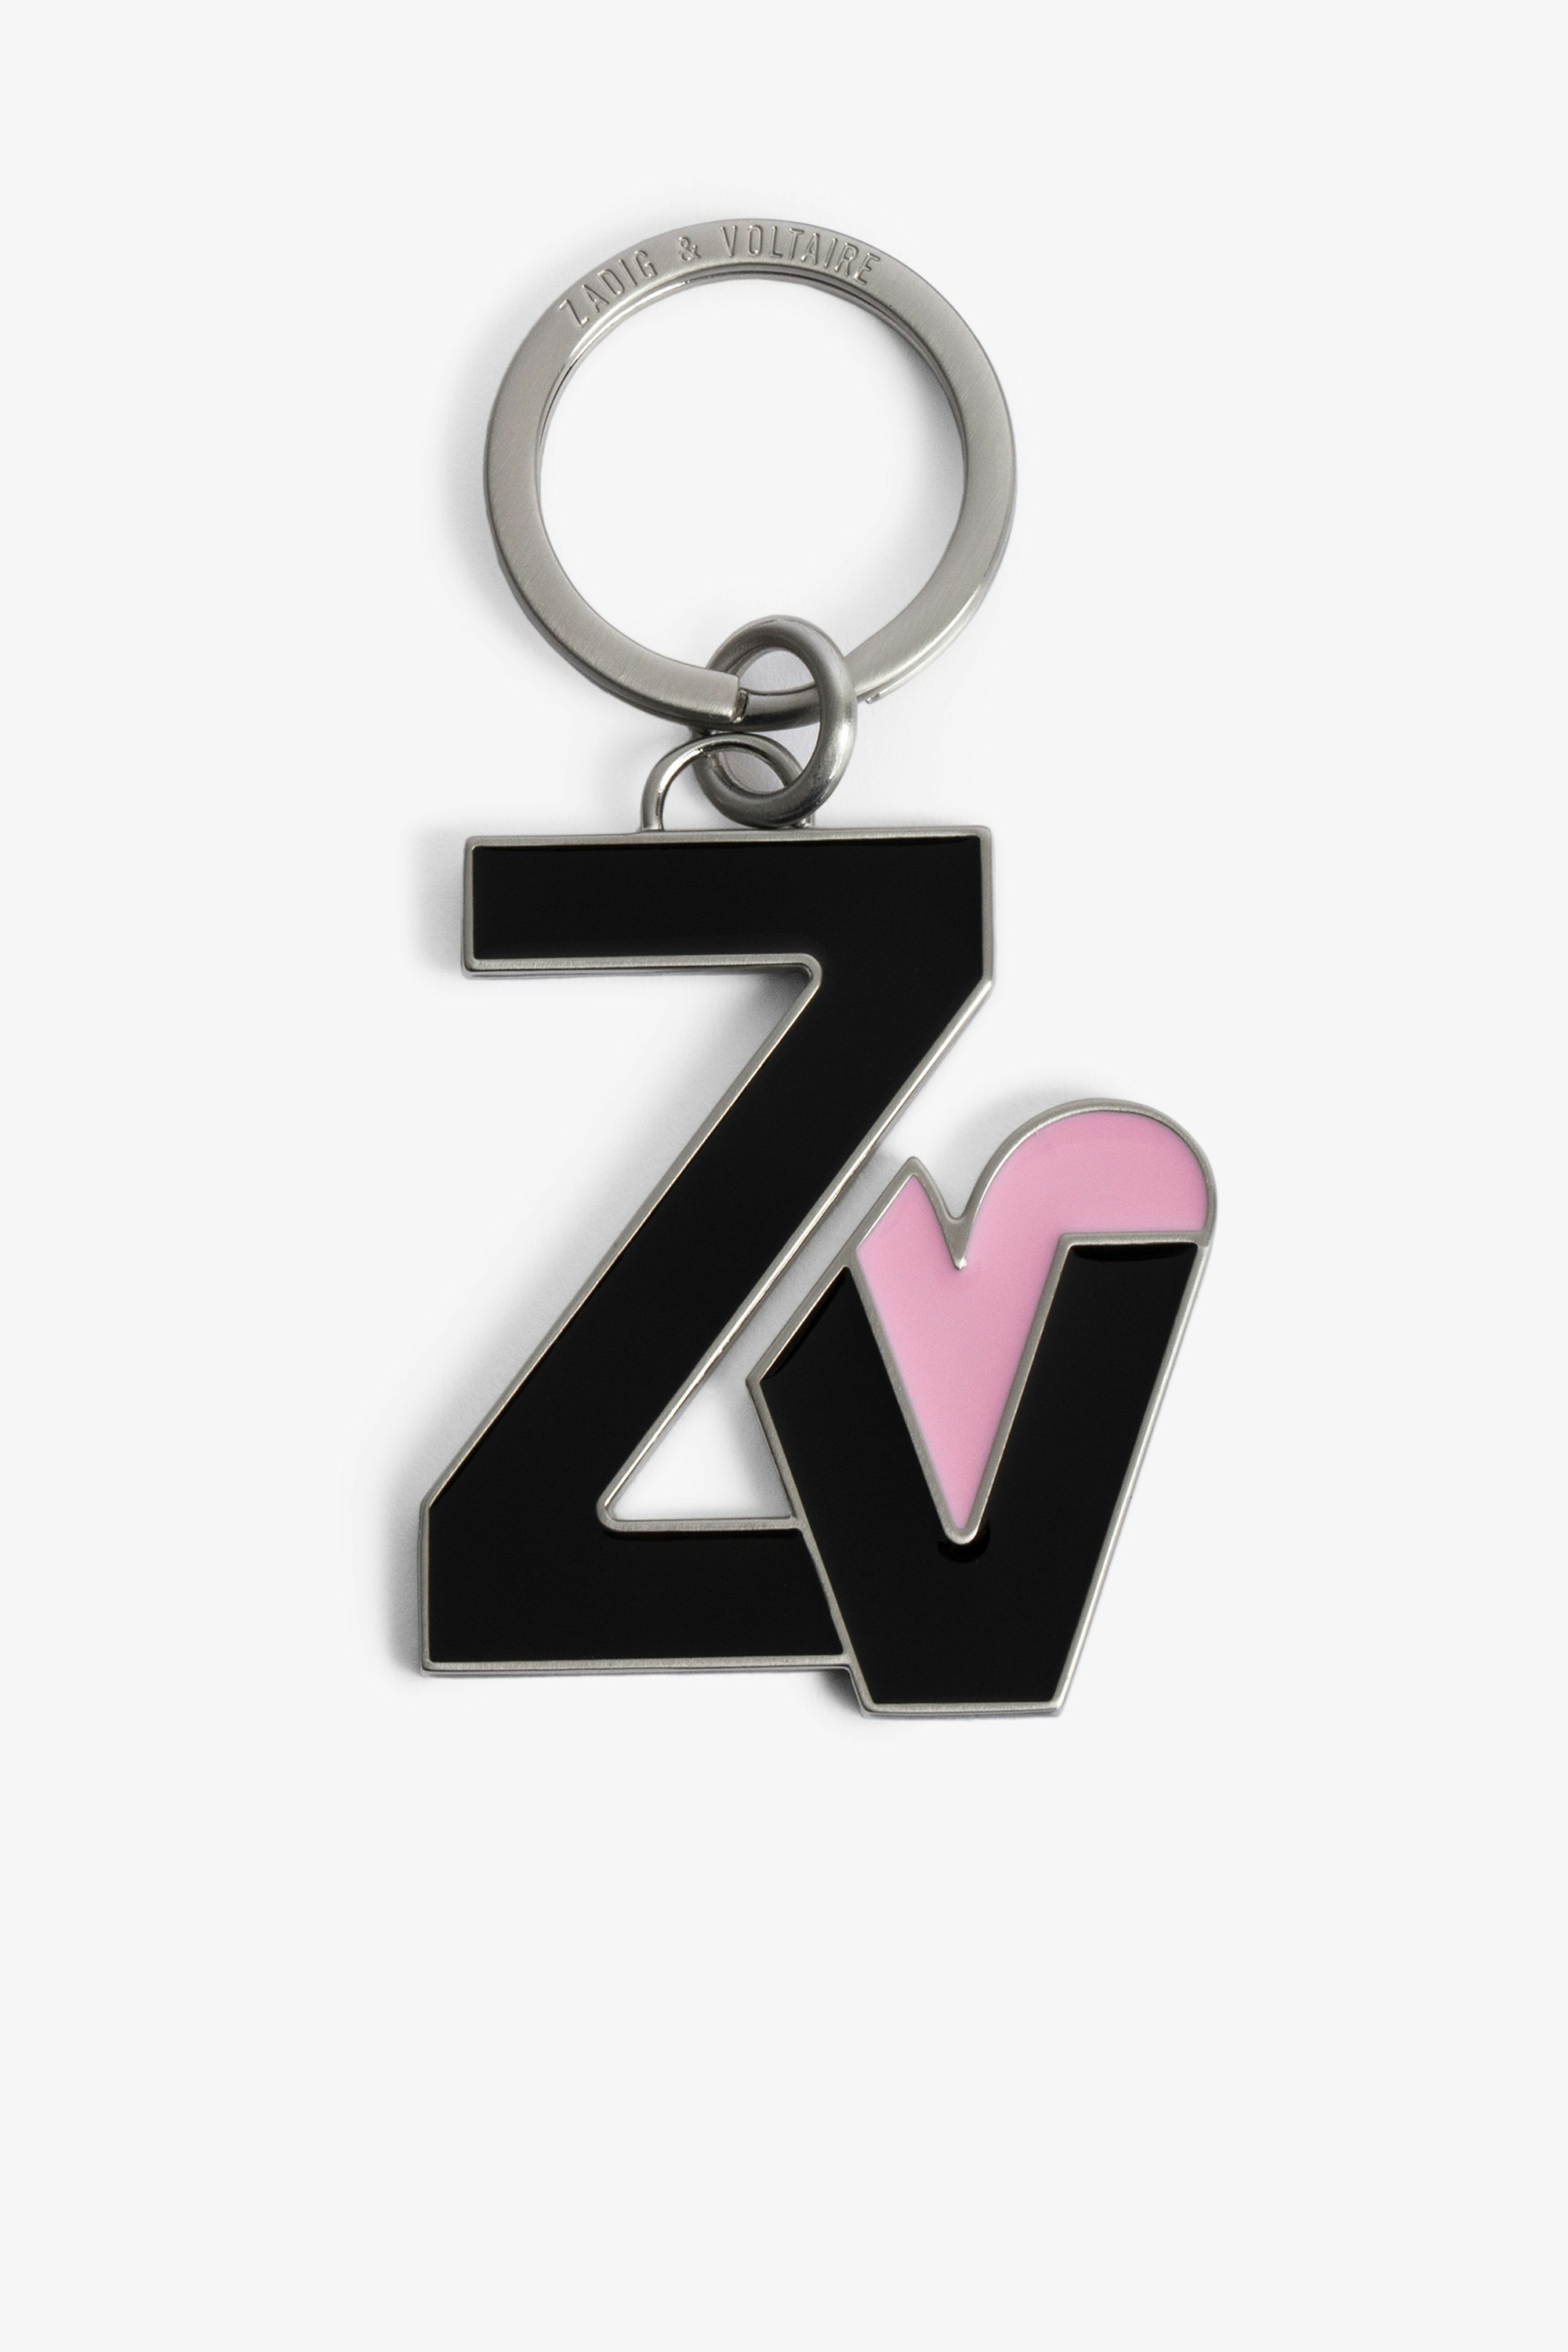 ZV Crush Key 指輪 Women’s ZV pink heart key ring